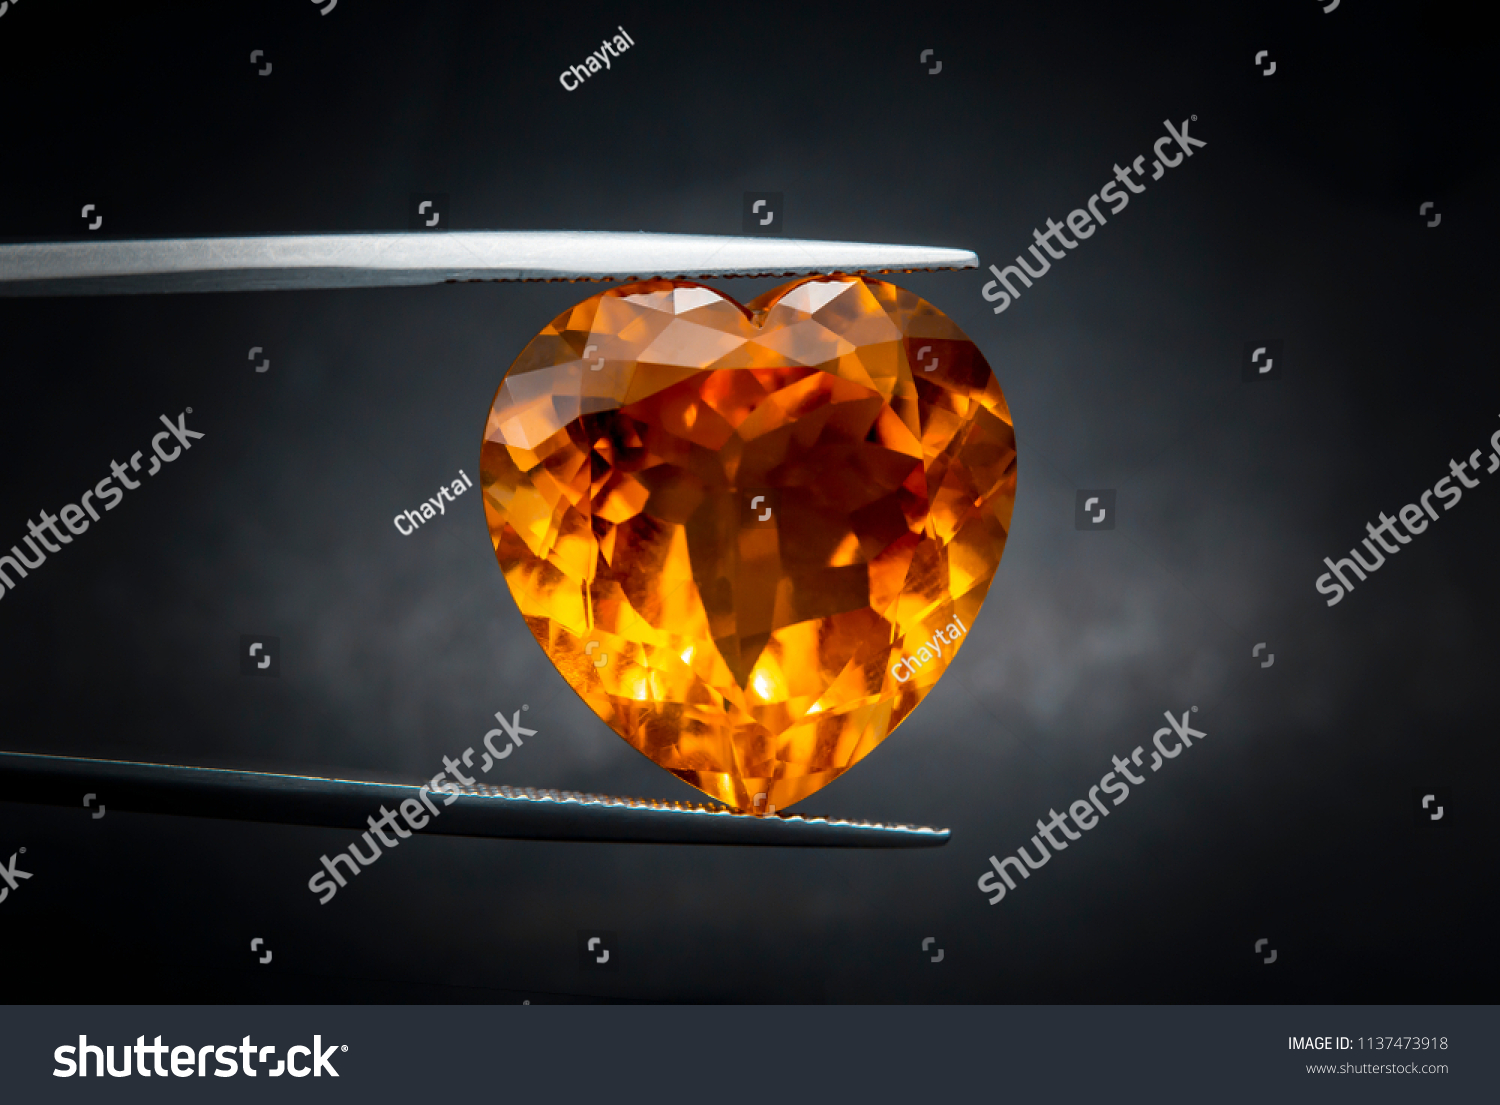 madeira citrine gemstone.The color of Madeira golden-orange to reddish-brown.Dark, pretty big expensive.heart-shaped
 #1137473918